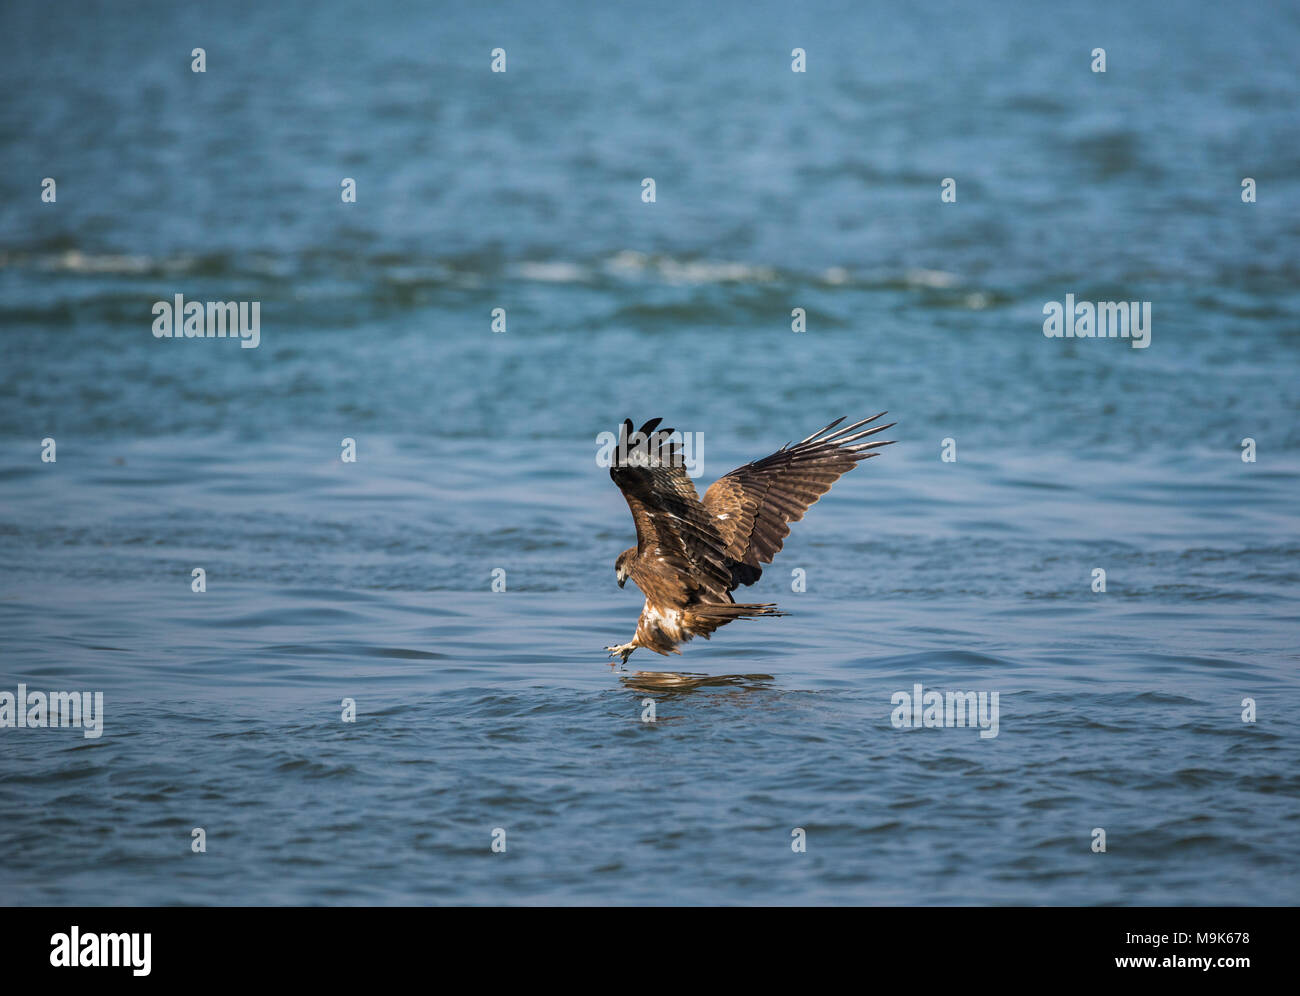 Black Kite bird catching fish from the sea Stock Photo